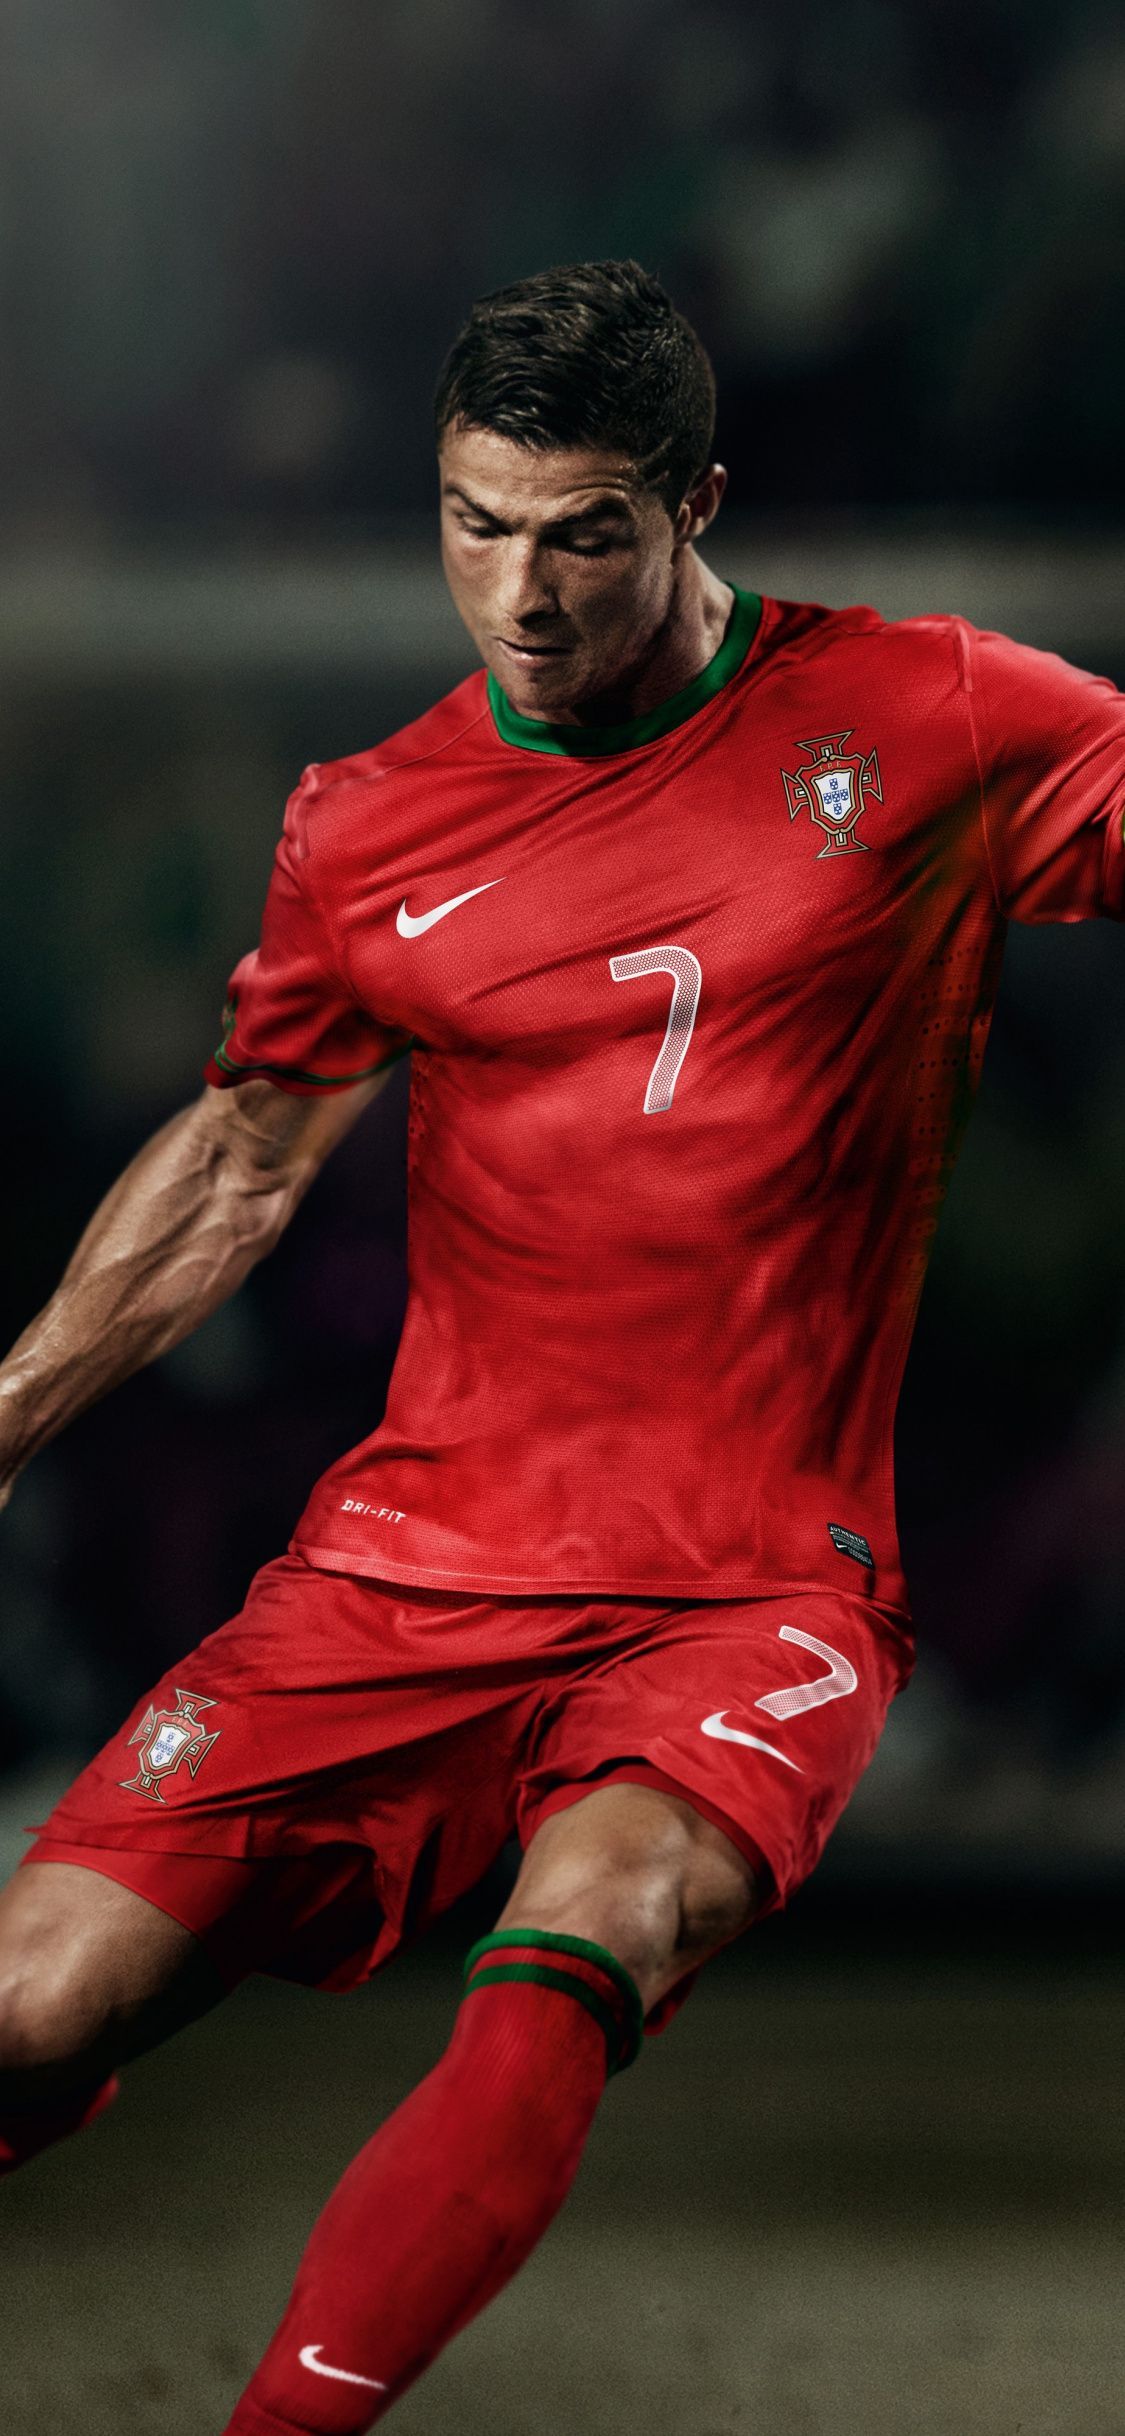 Cristiano Ronaldo, Soccer player, celebrity, red jersey, 1125x2436 wallpaper. Ronaldo soccer, Ronaldo soccer player, Cristiano ronaldo